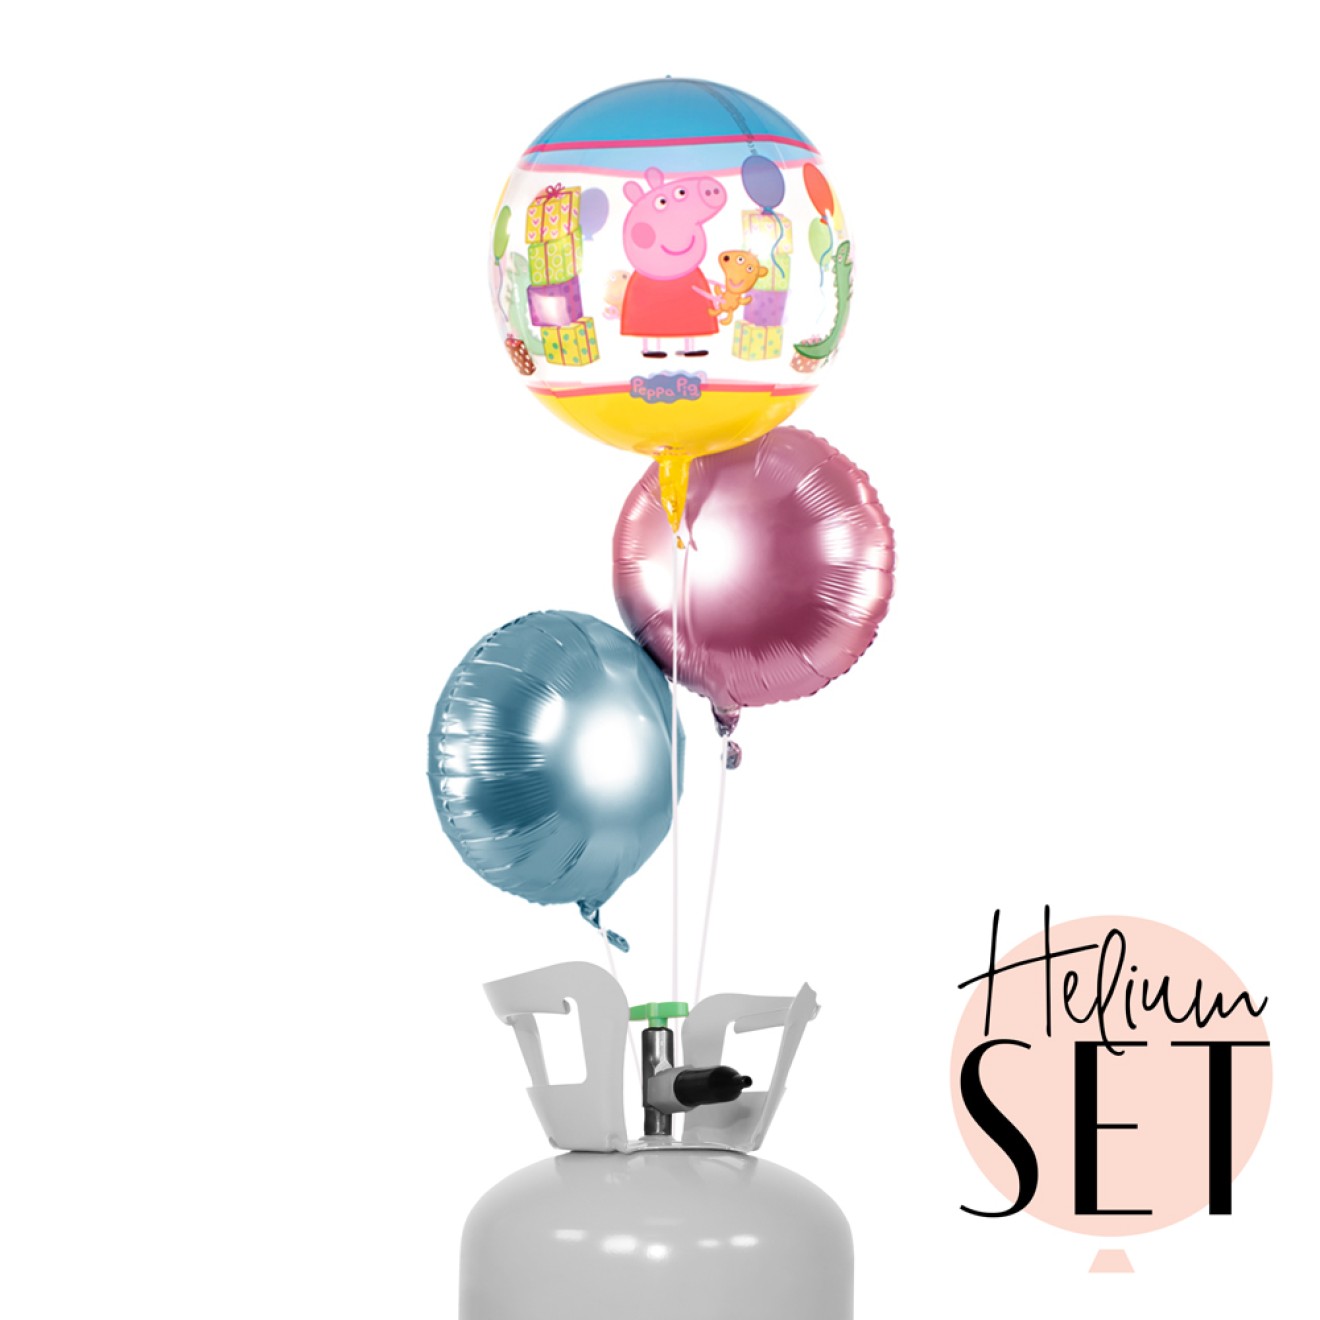 Helium Set - Thomas the Lok